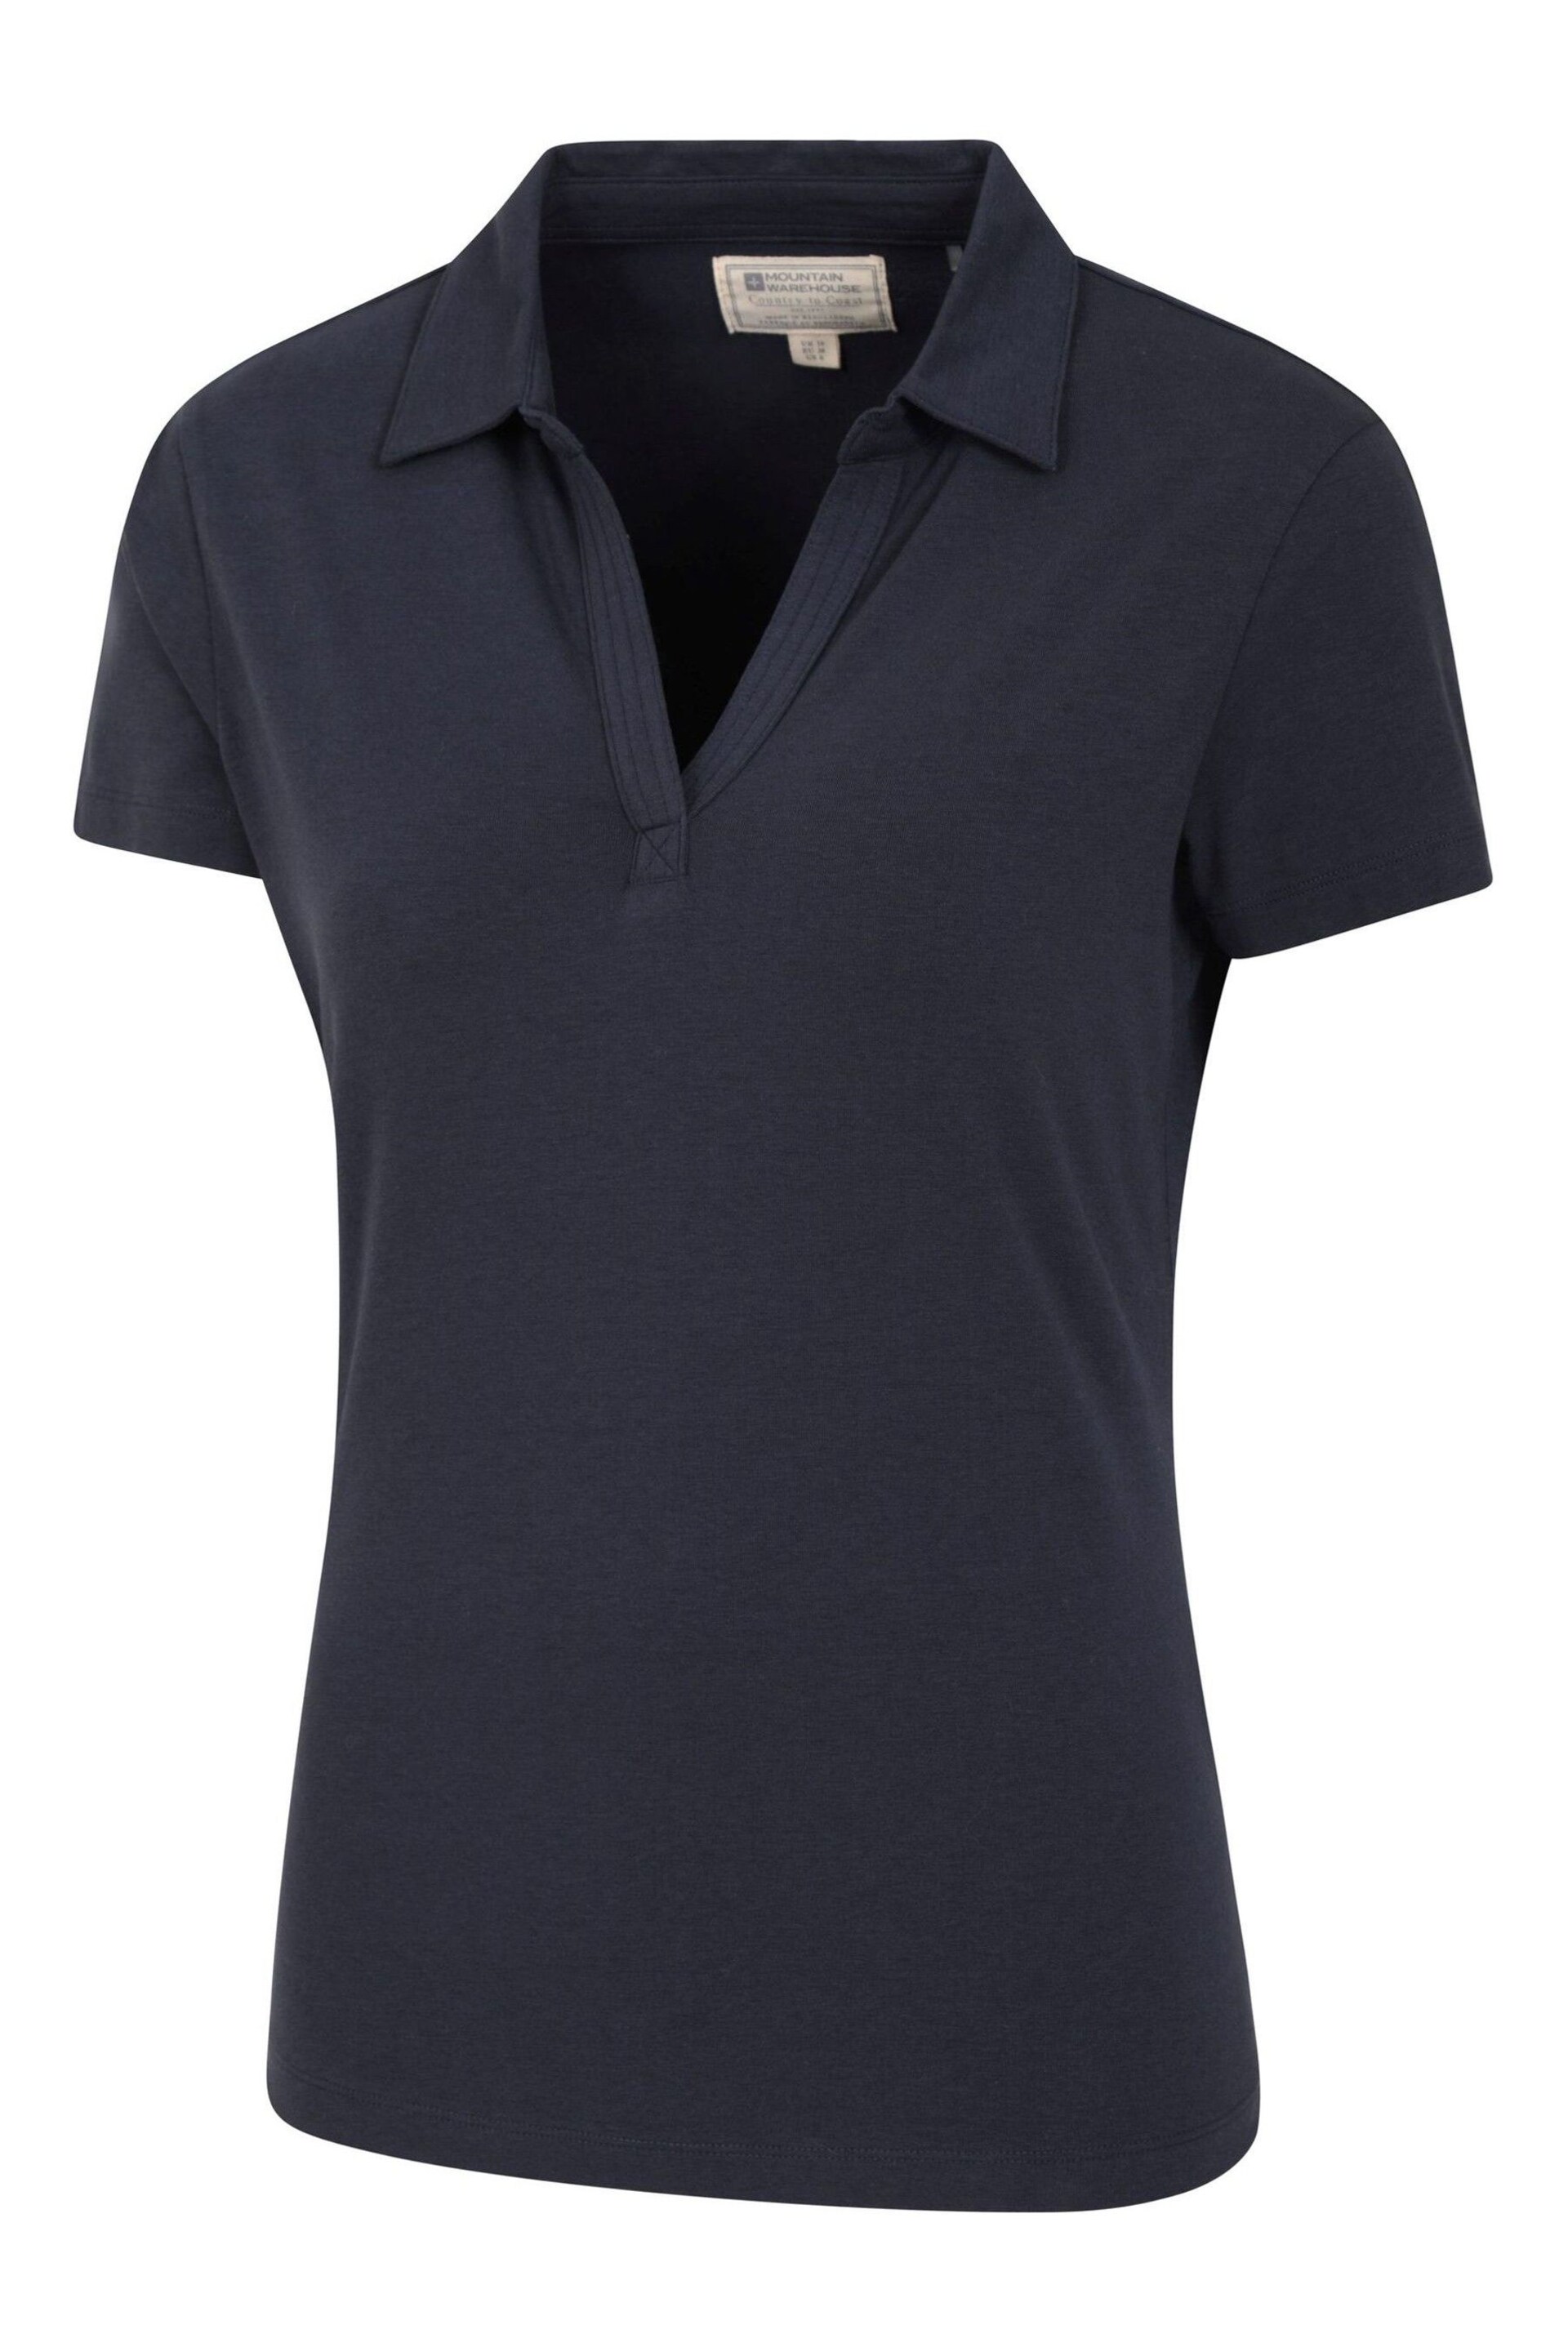 Mountain Warehouse Blue Womens UV Polo Shirt - Image 3 of 4